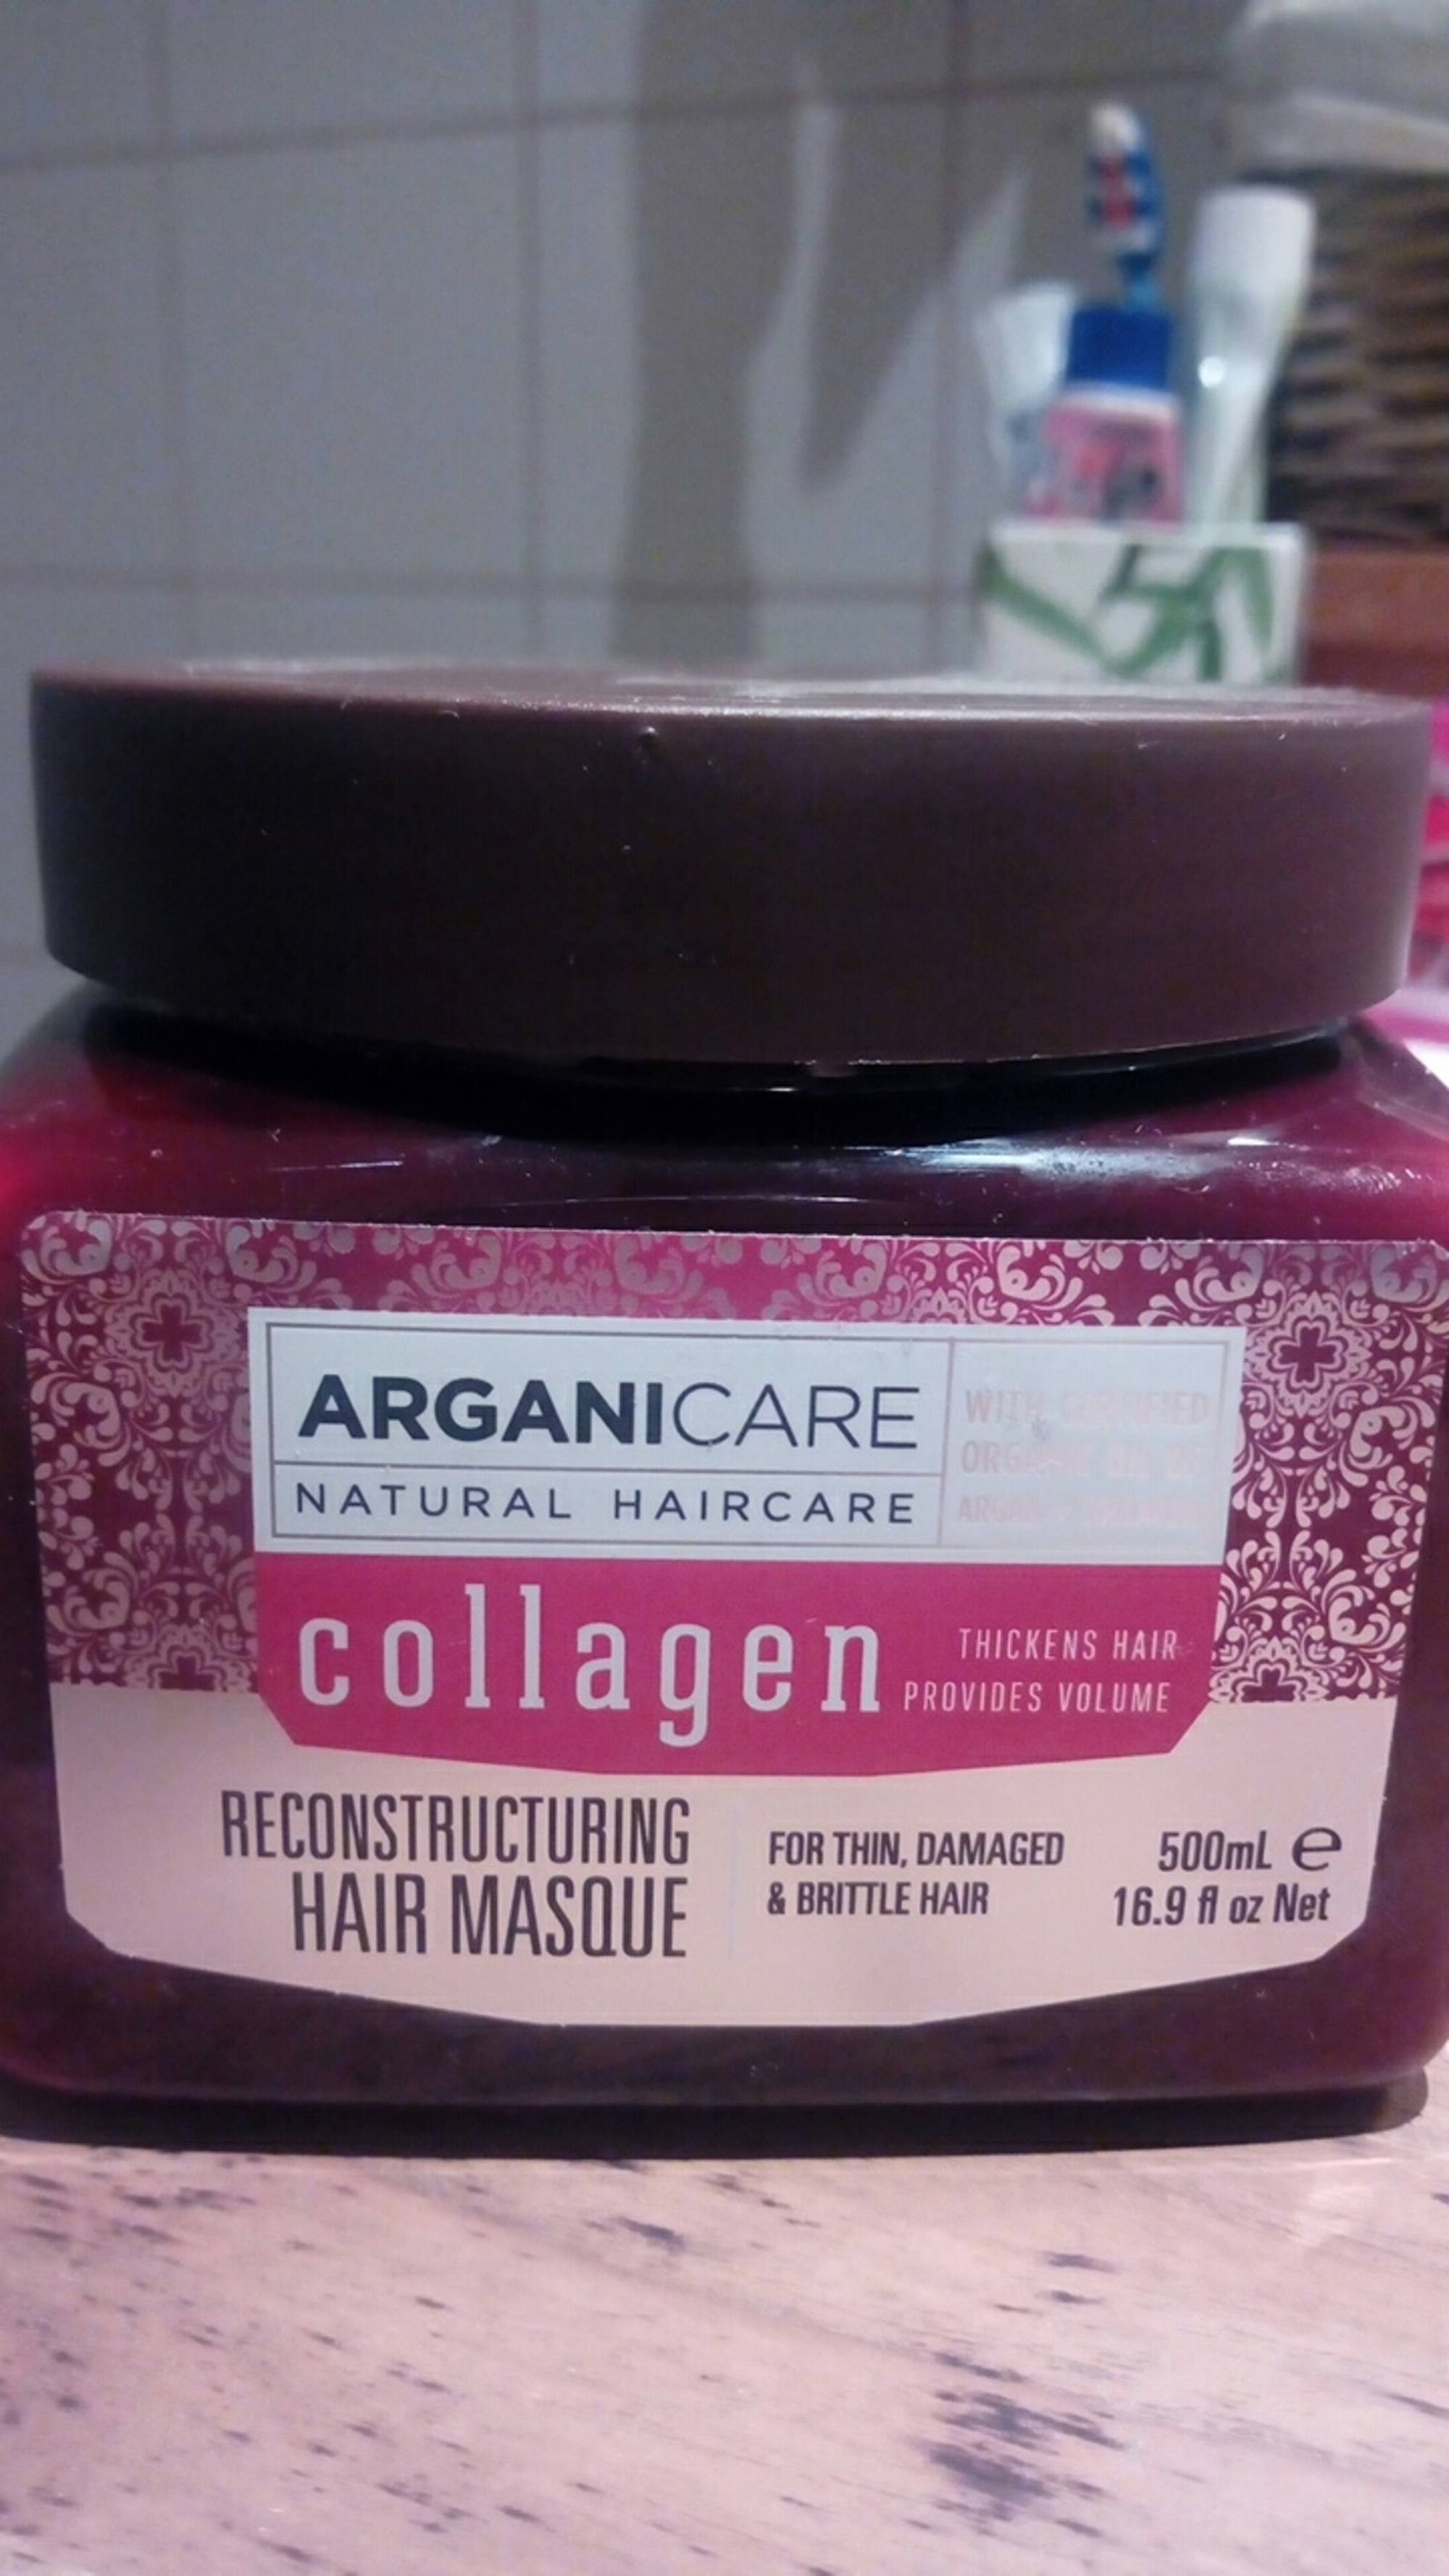 ARGANICARE - Collagen - Reconstructuring hair masque